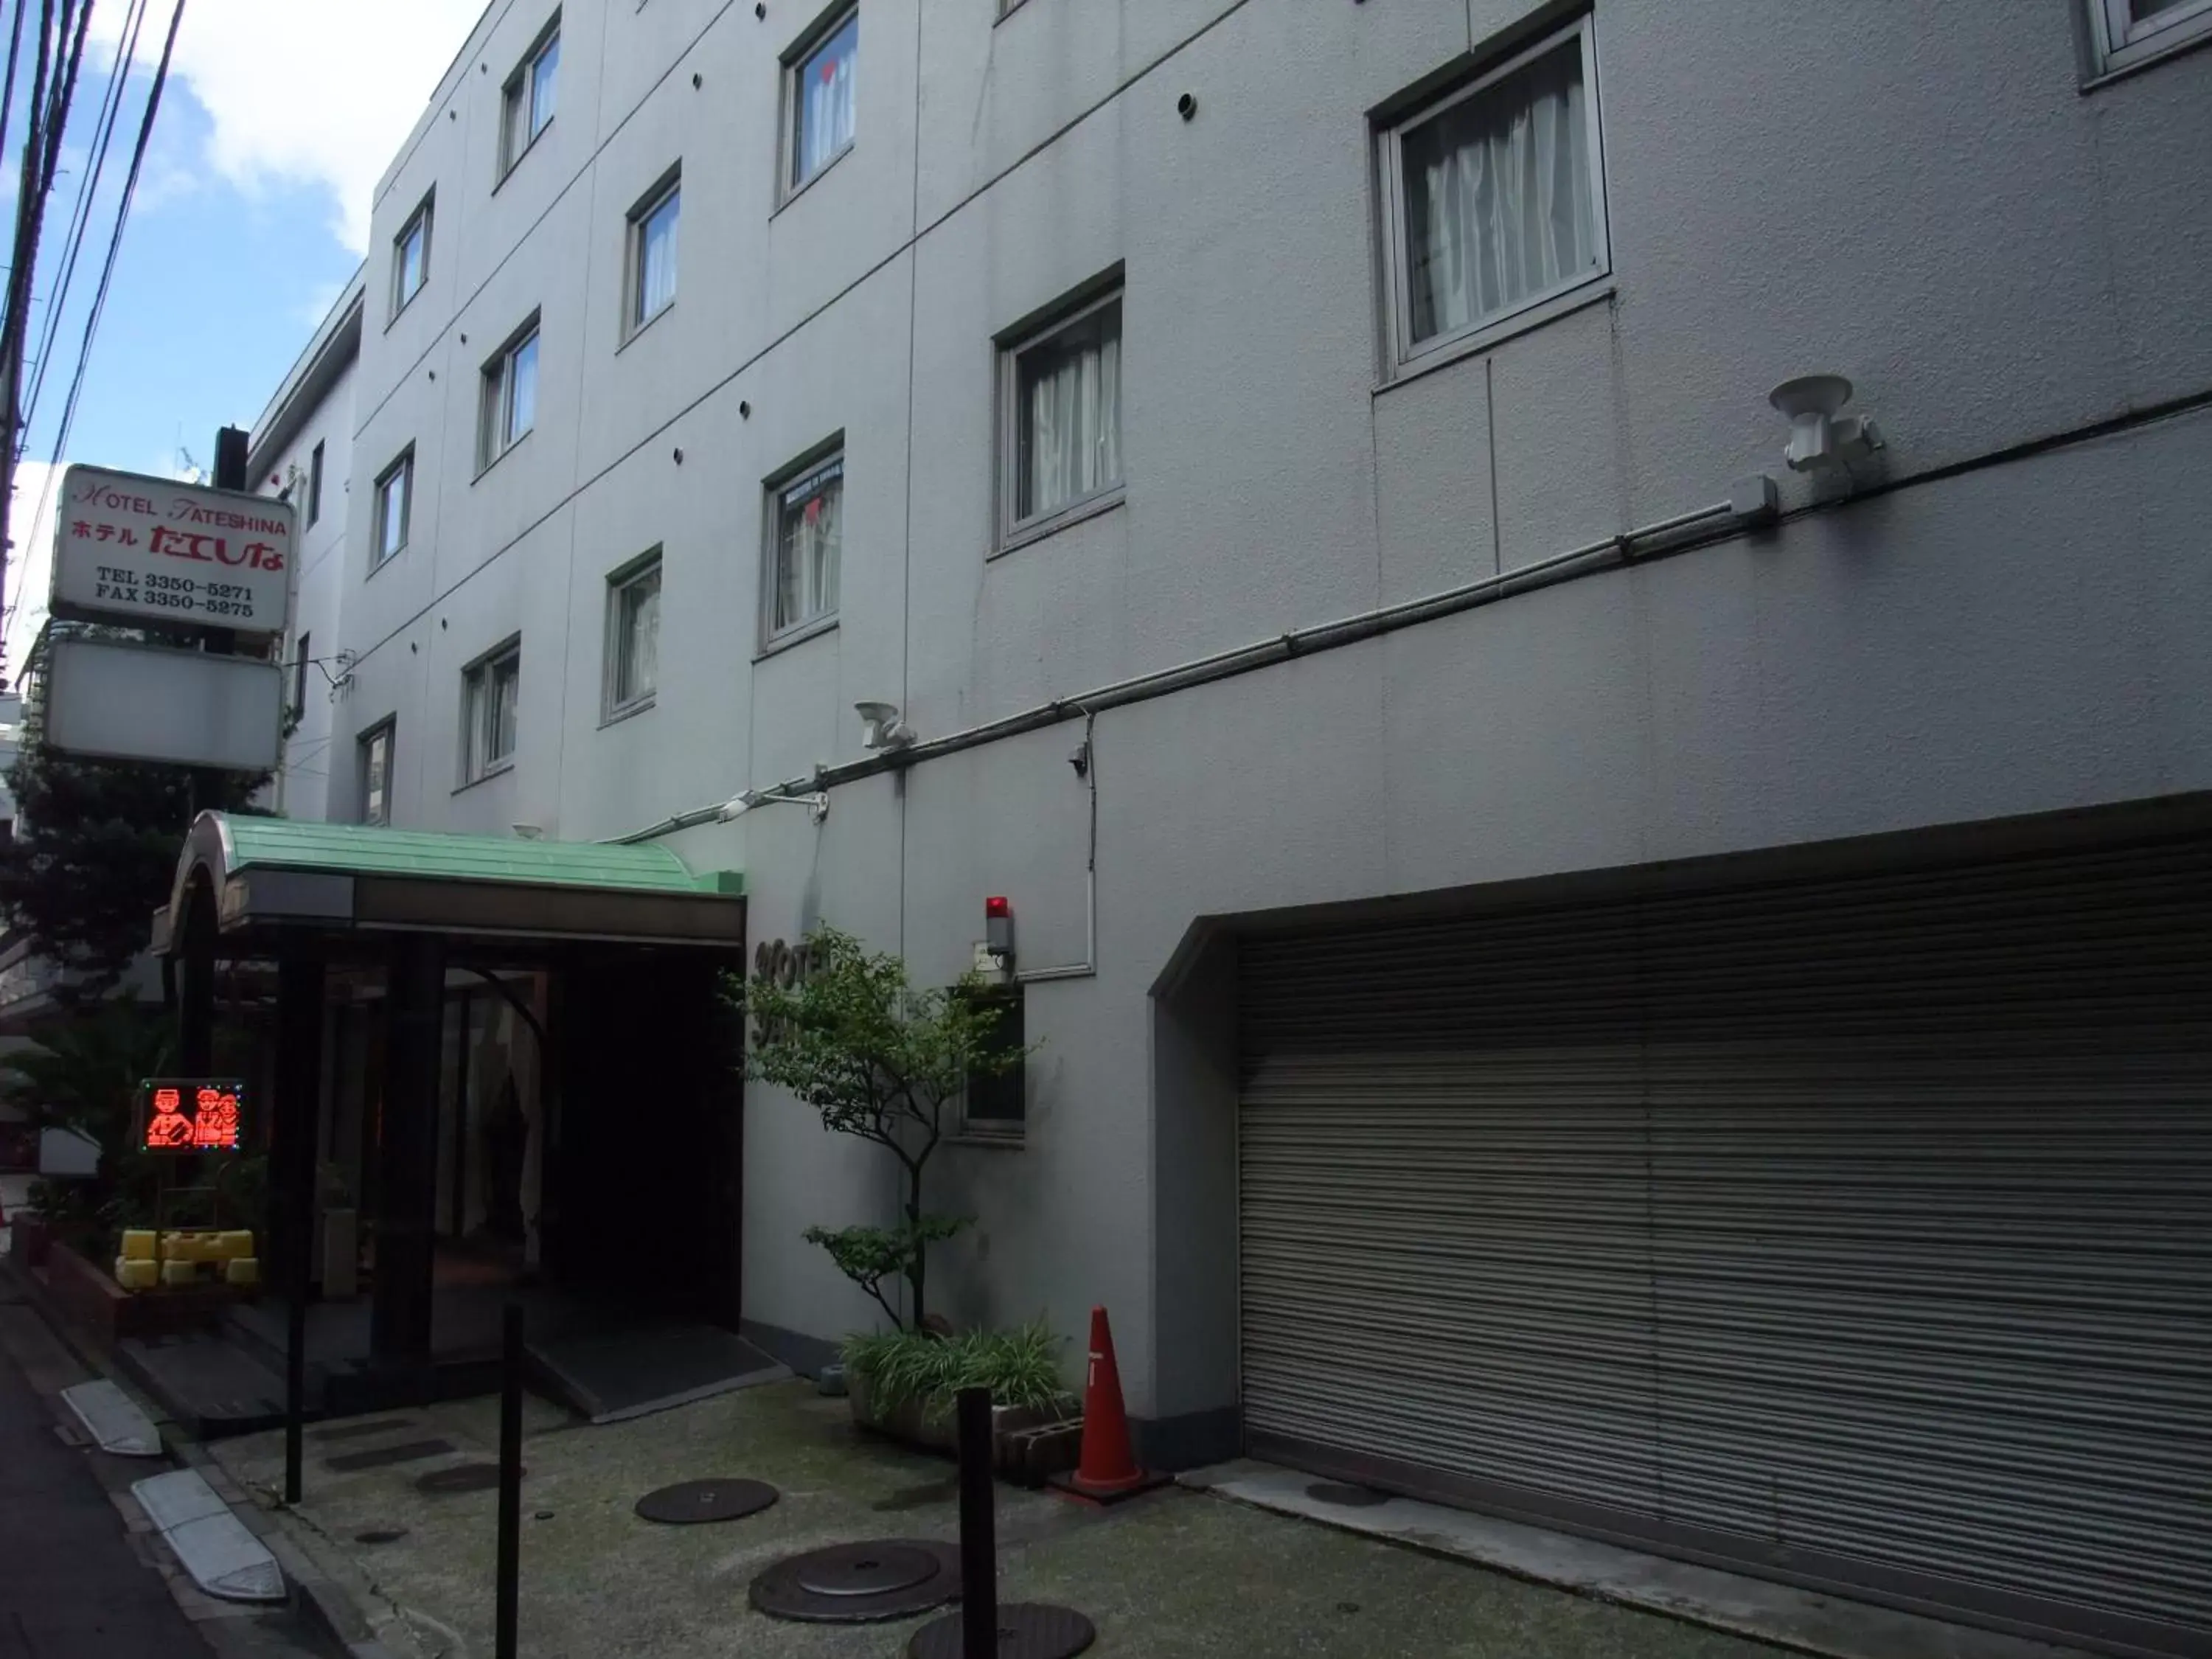 Facade/Entrance in Hotel Tateshina